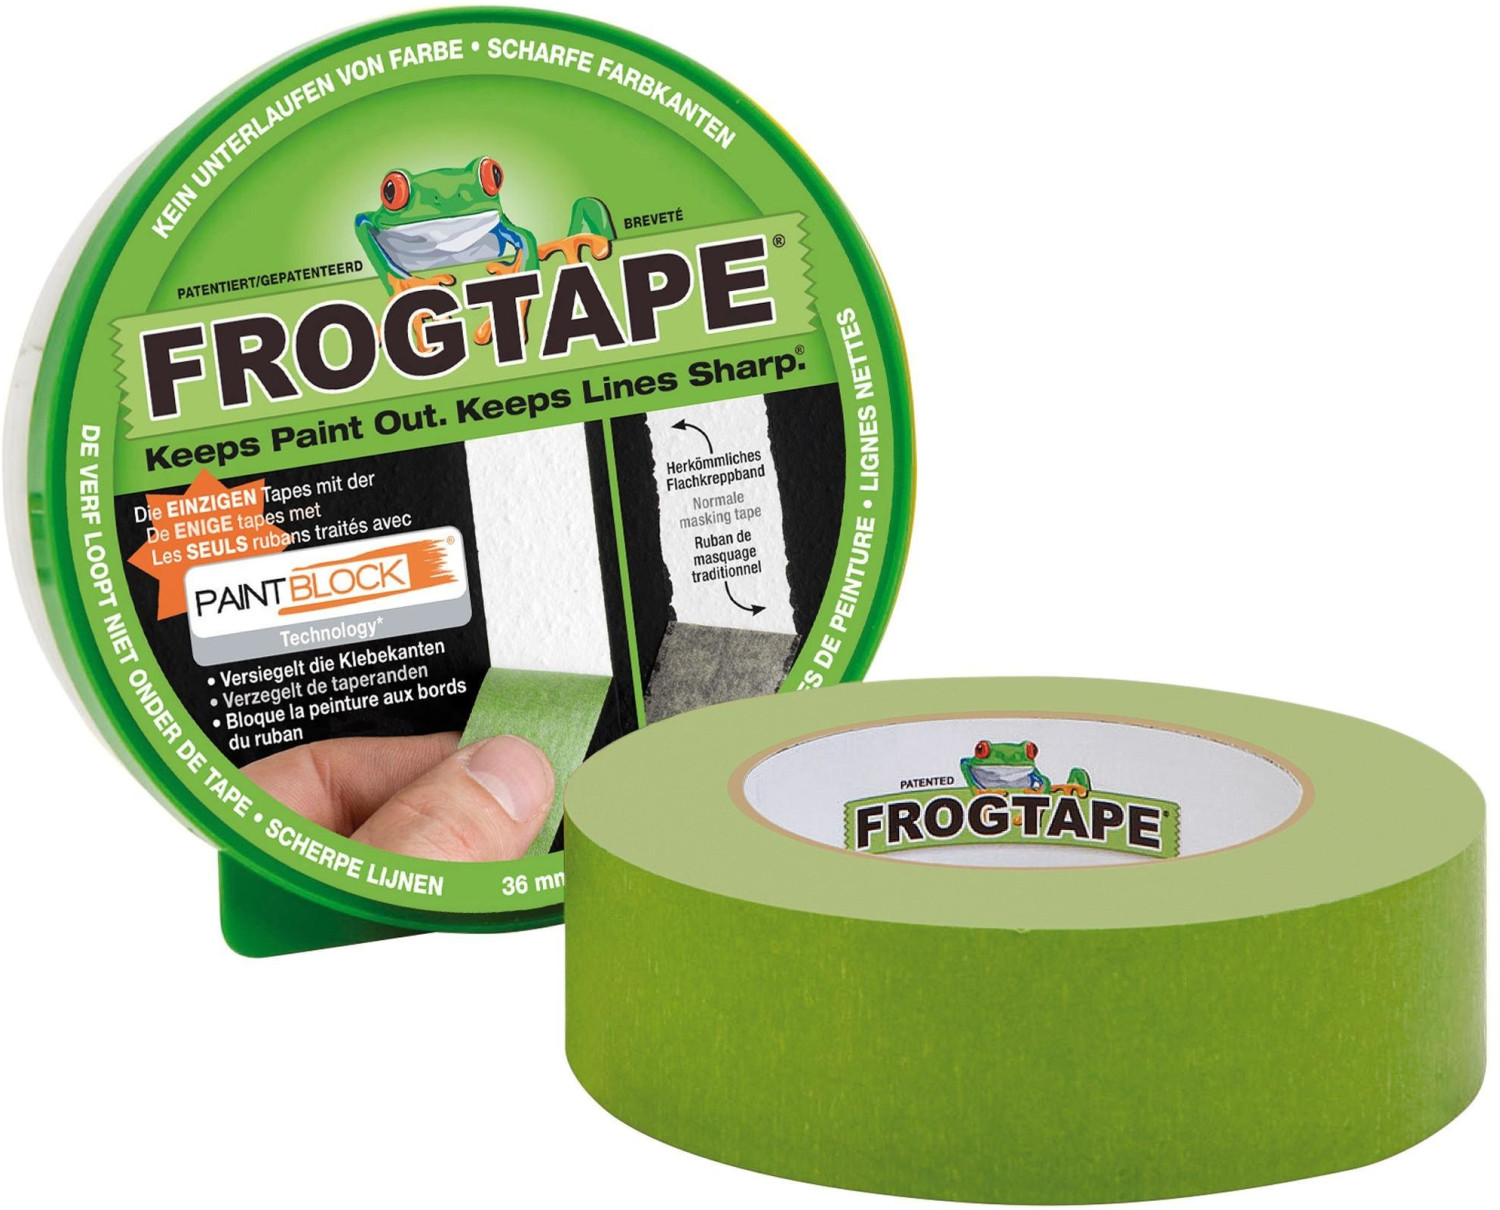 FrogTape 41,1m x 36mm ab 8,70 € | Preisvergleich bei idealo.de